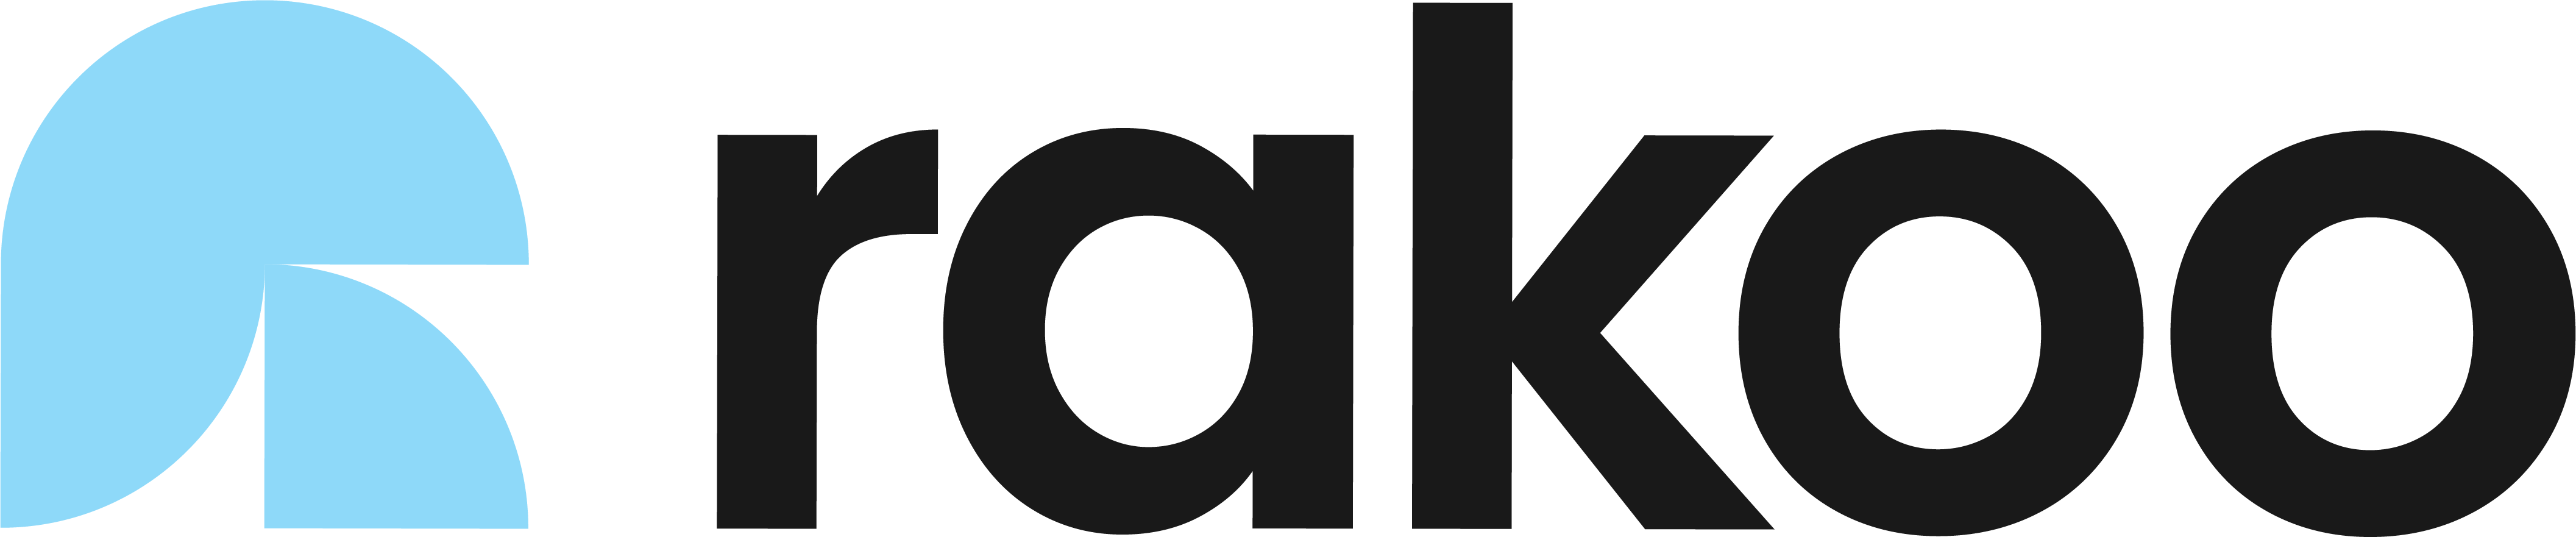 Rakoo logo